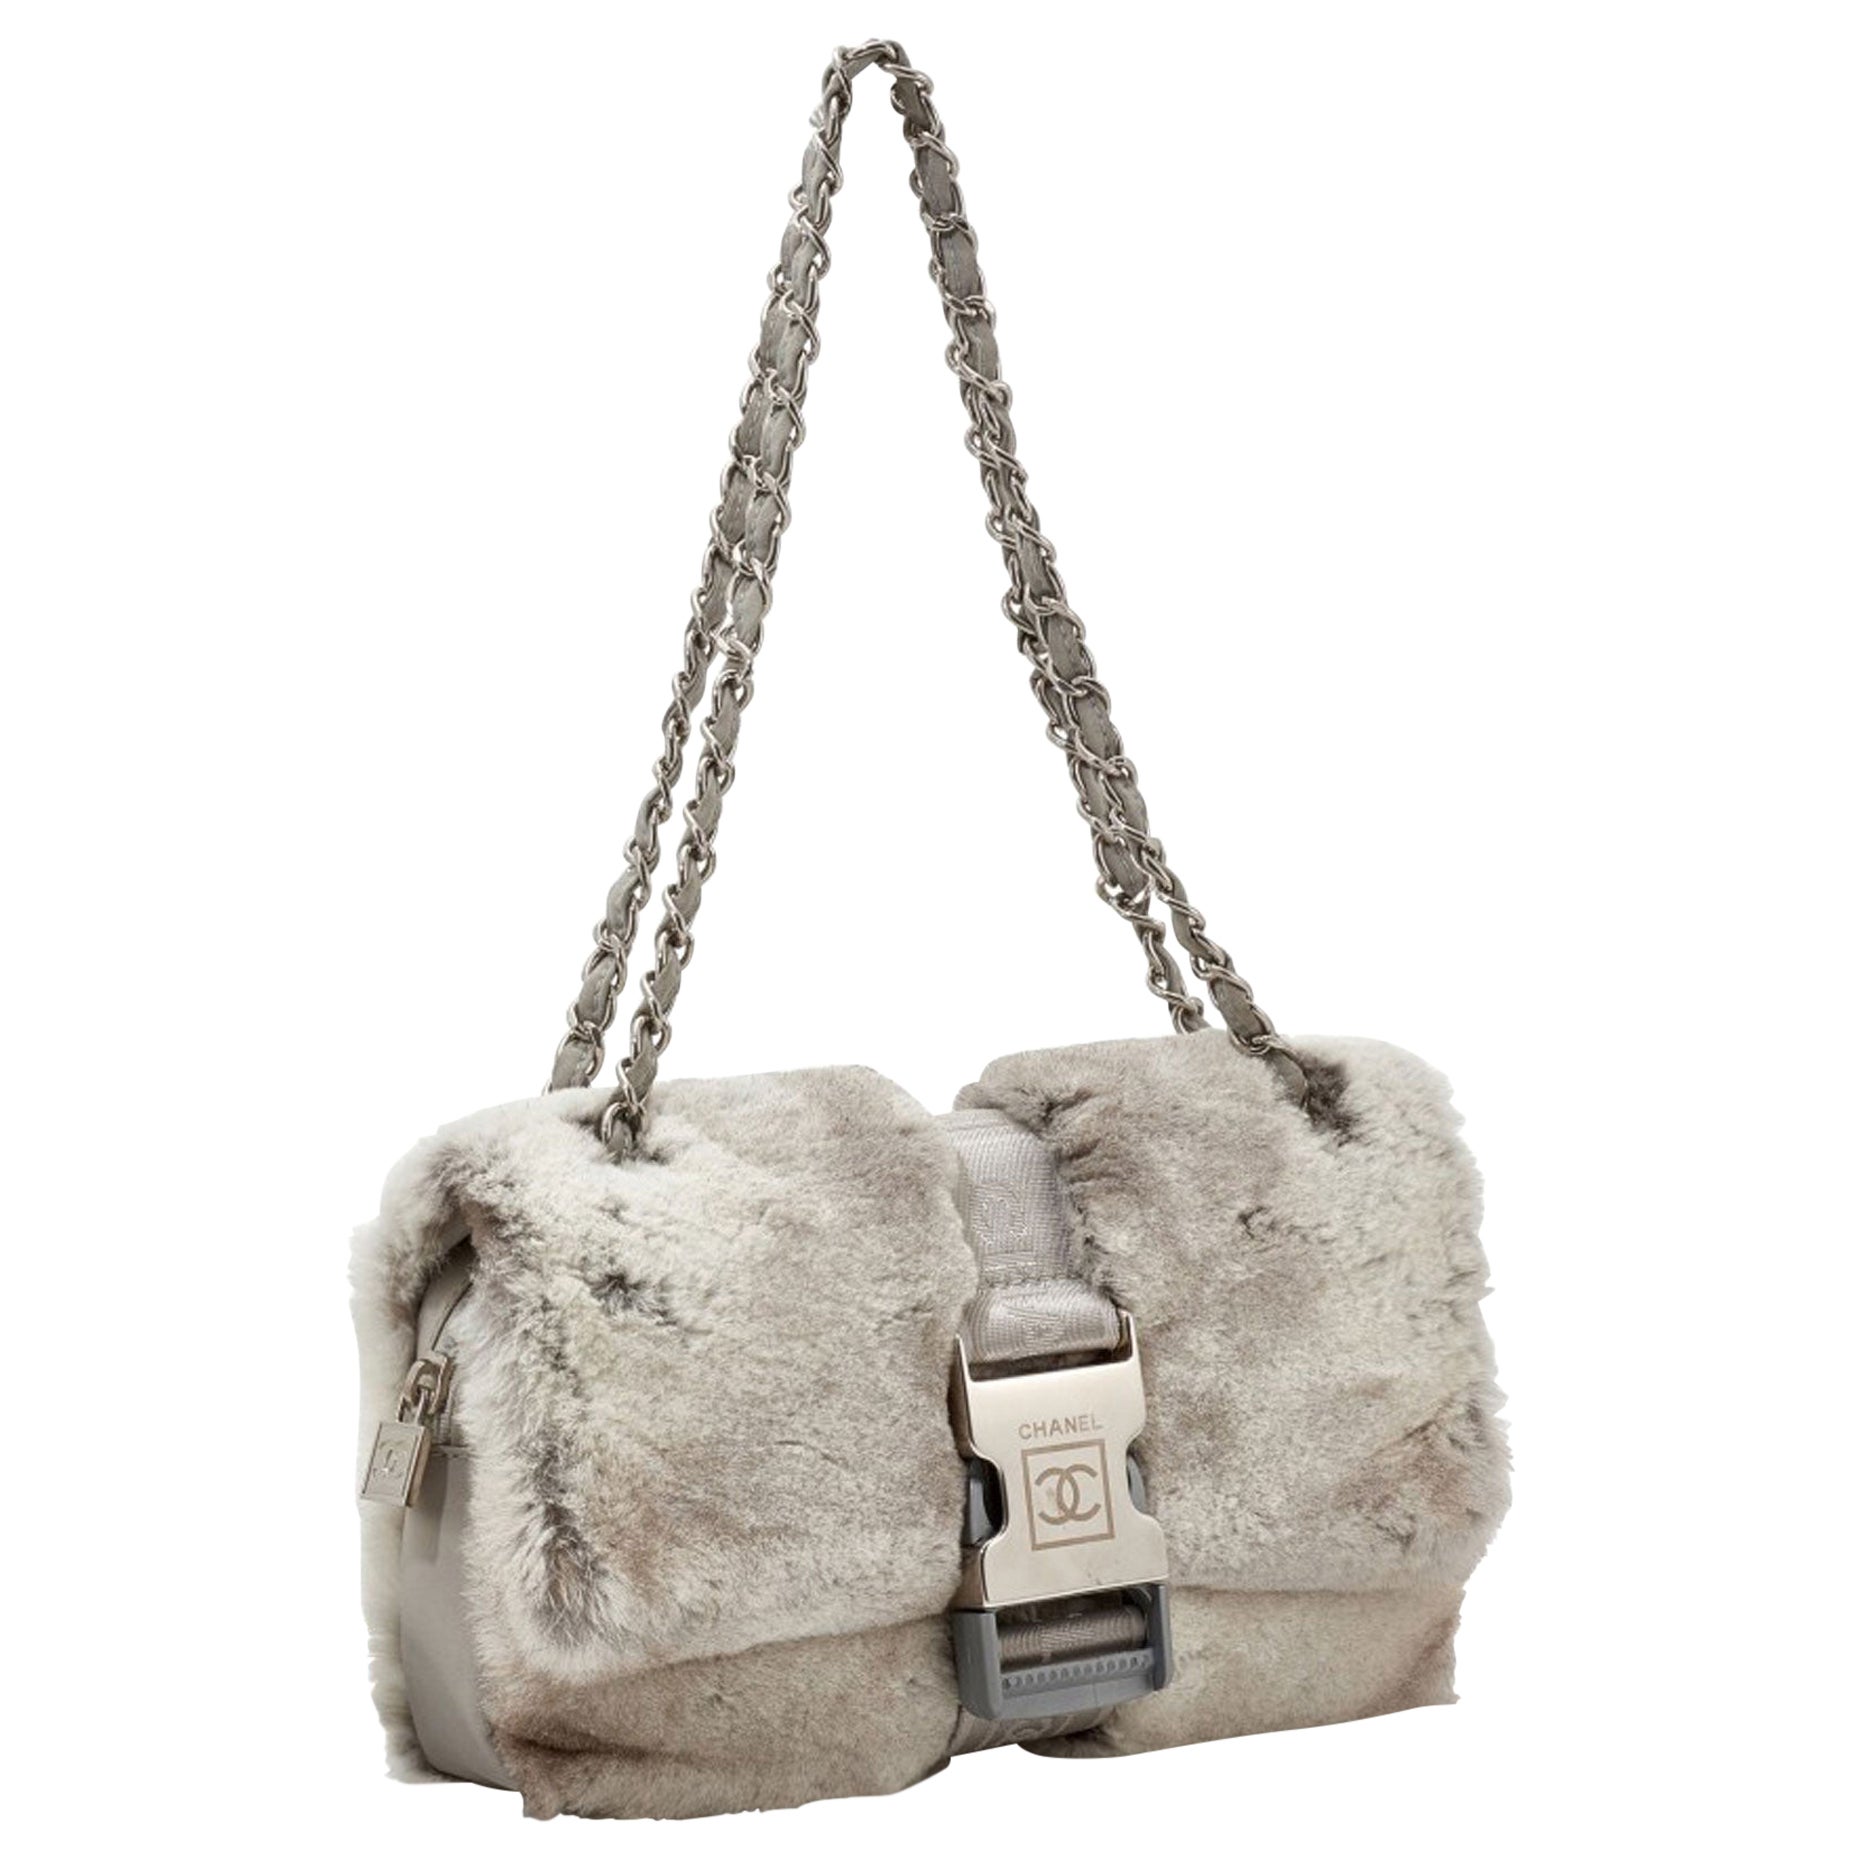 Sold at Auction: Chanel - New XL Deauville Denim Tote Shoulder Bag - CC  Logo - Blue & Silver GST